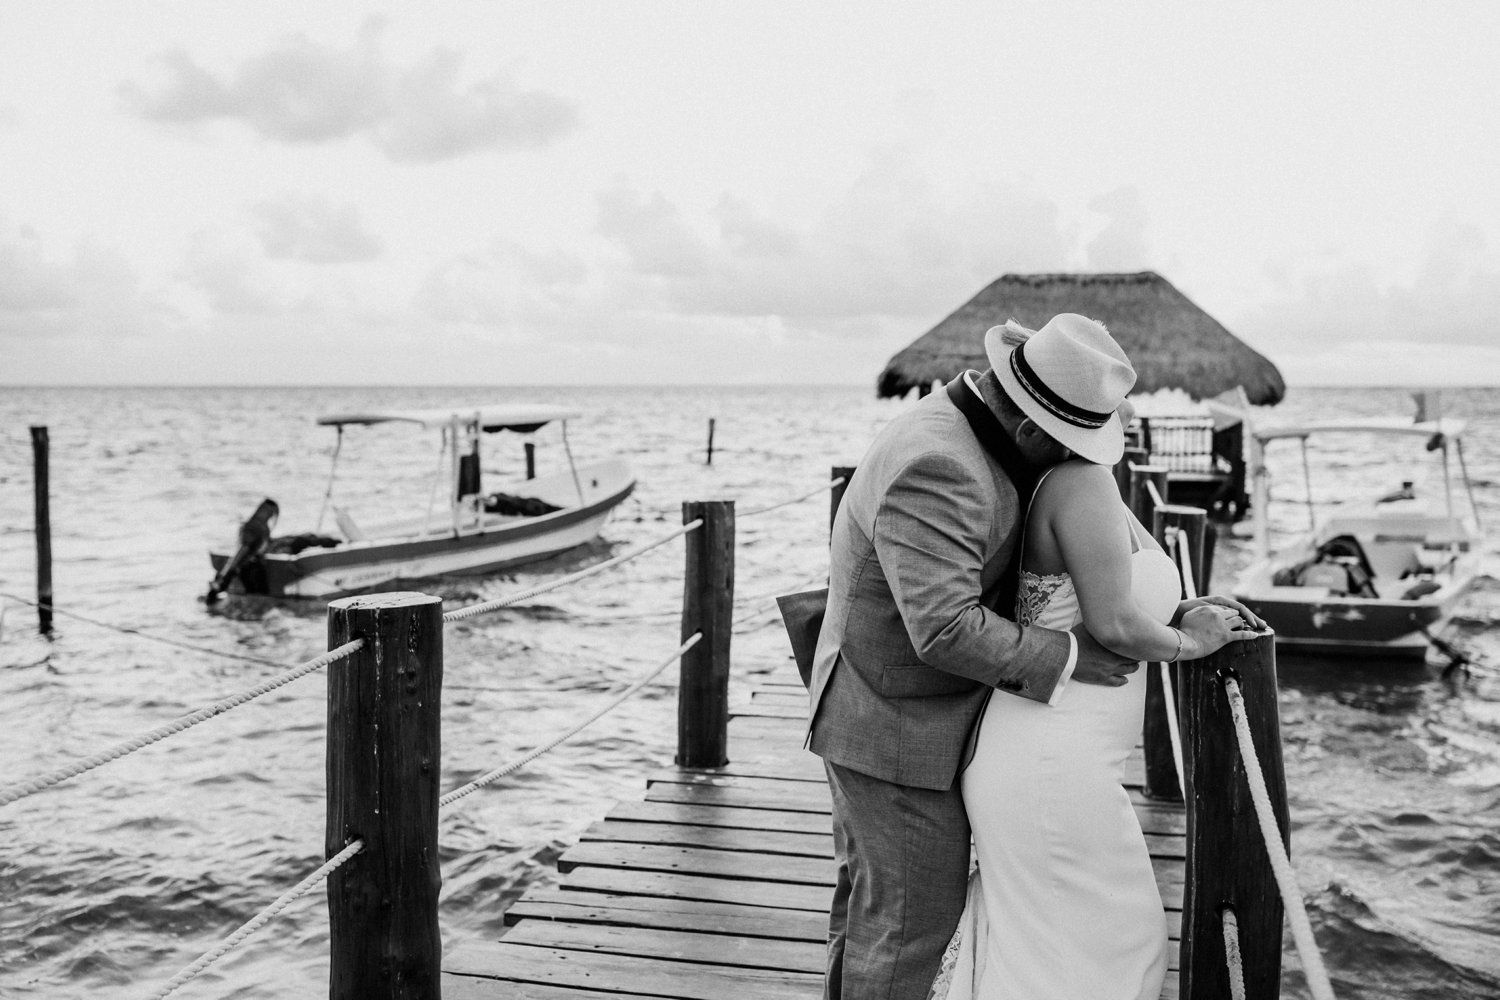  images by feliciathephotographer.com | destination wedding photographer | mexico | tropical | fiji | venue | azul beach resort | riviera maya | bridal portraits | lace dress | grey suit | sunrise | oceanside | romantic | whimsical | black and white | 